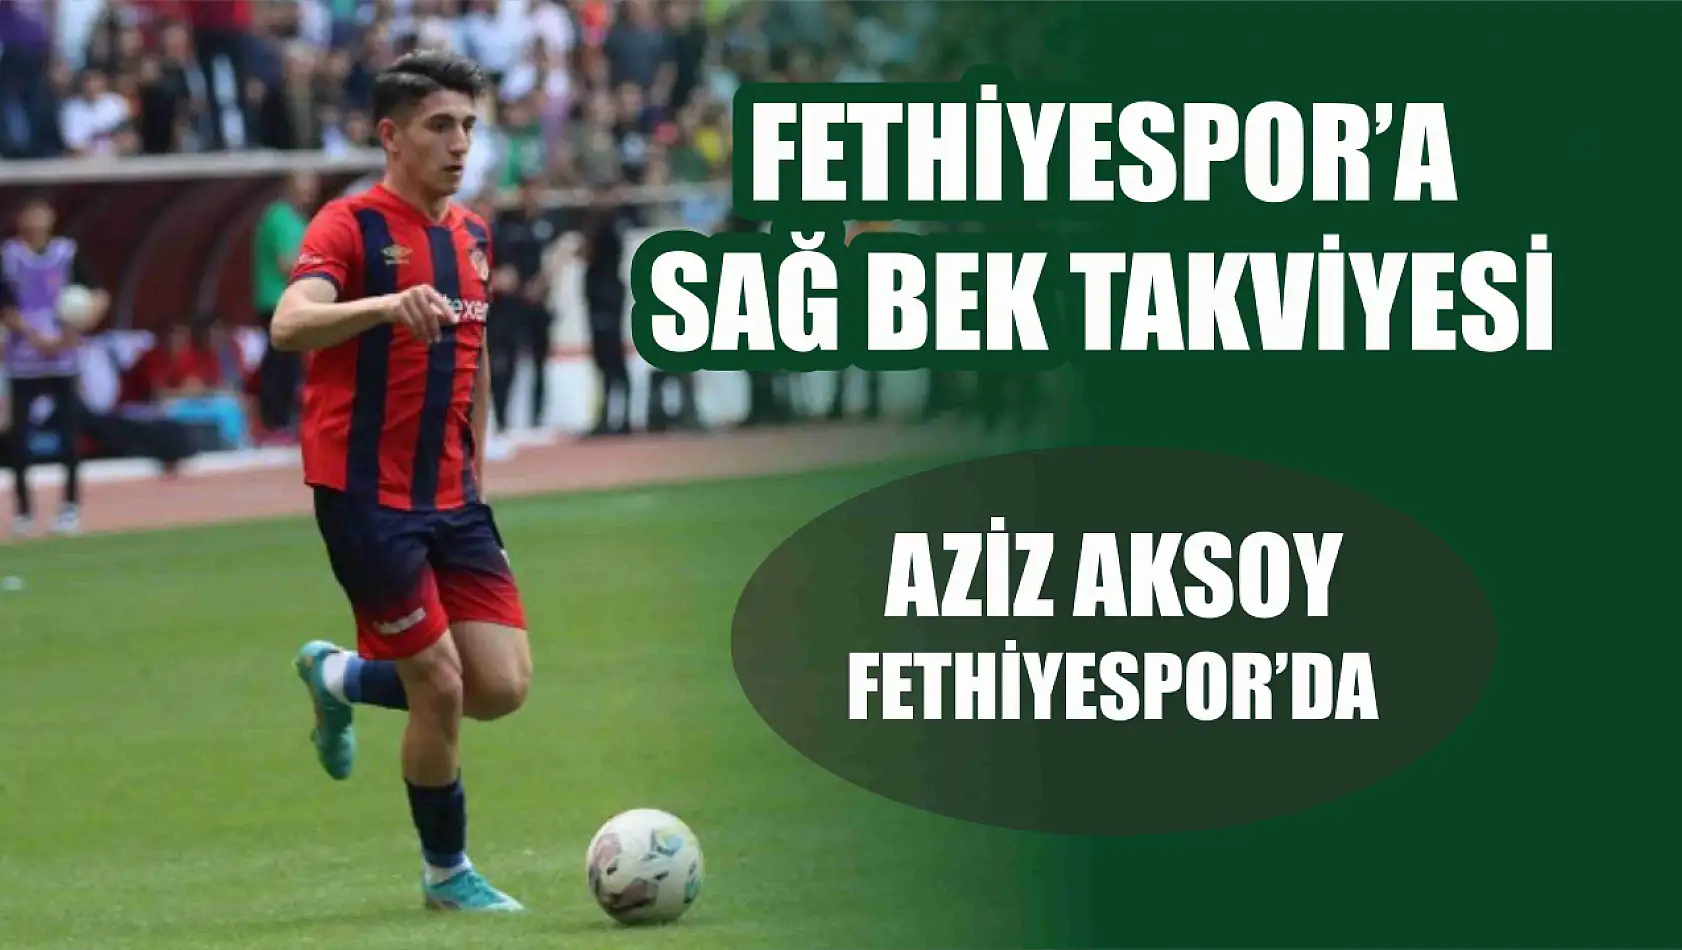 Fethiyespor'a Sağ Bek Takviyesi: Aziz Aksoy Fethiyespor'da